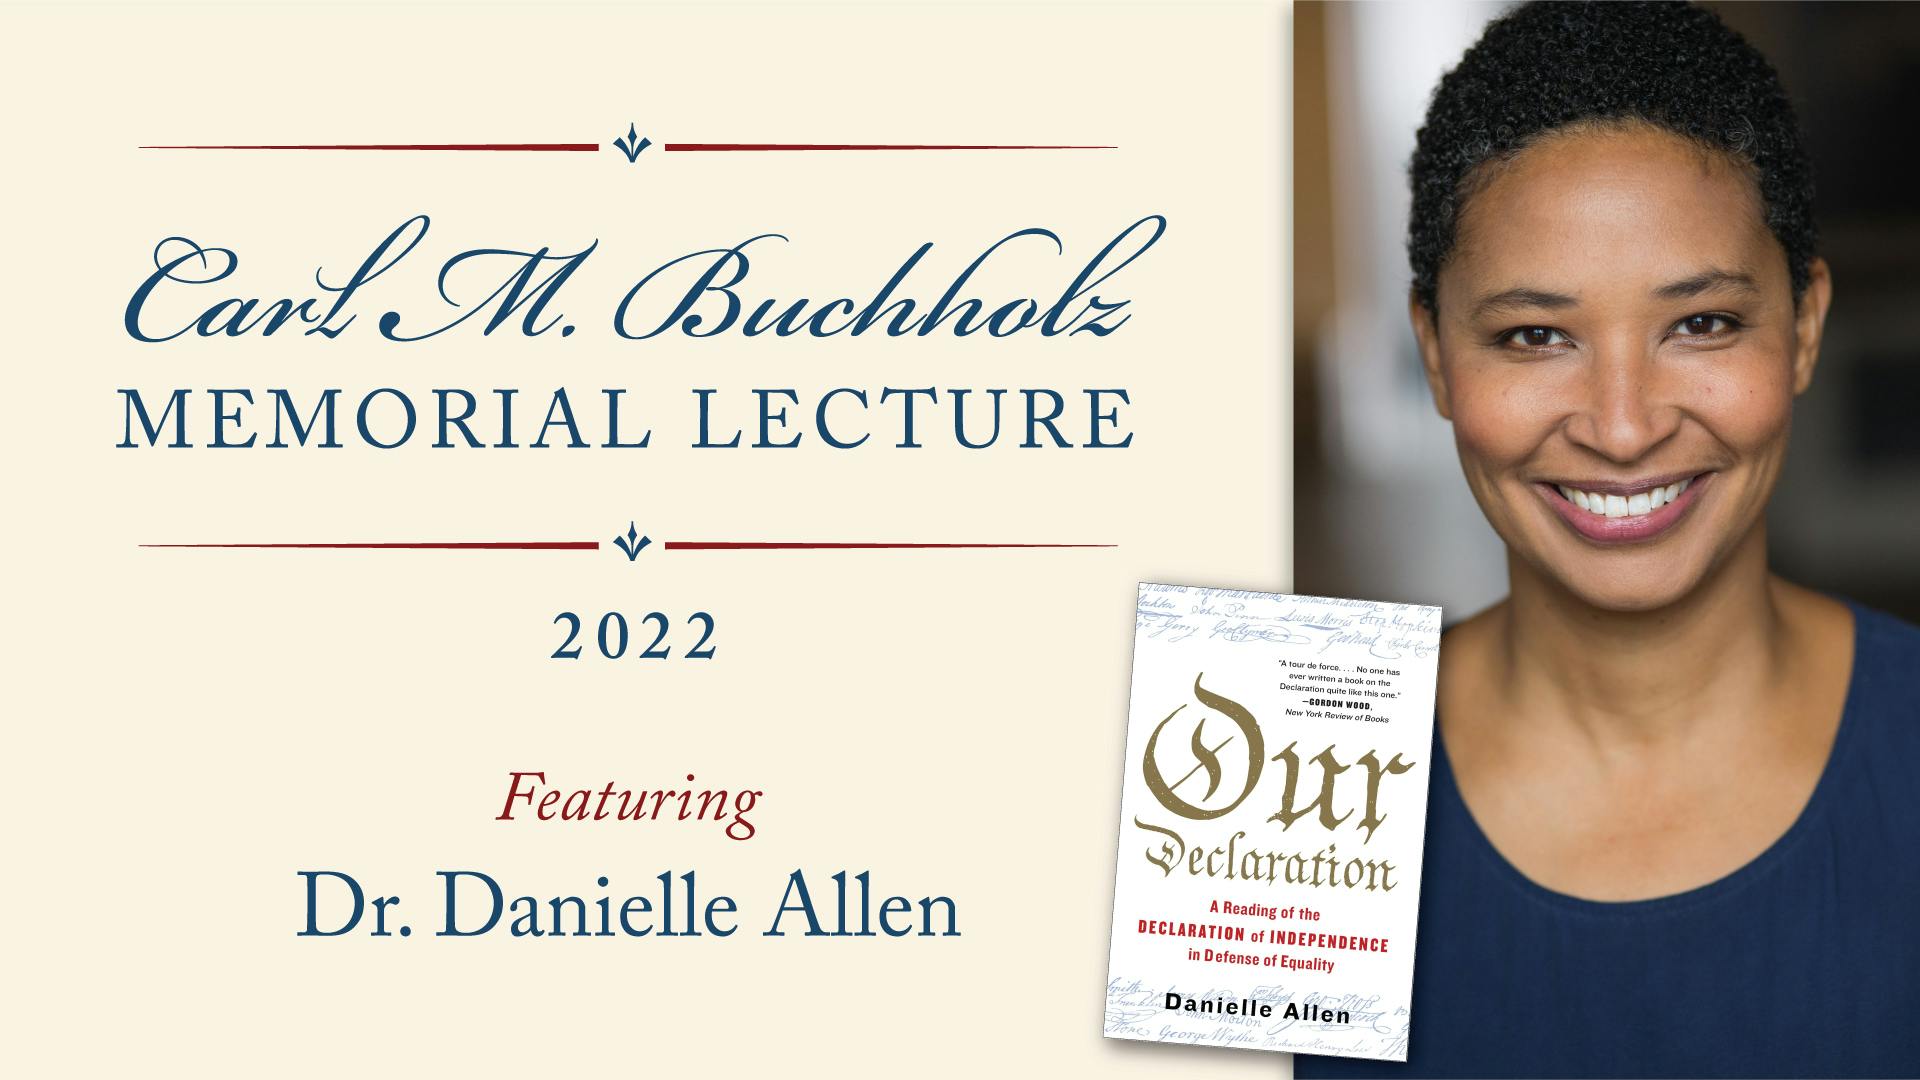 Danielle Allen to Discuss Groundbreaking Book “Our Declaration," Jan. of the American Revolution